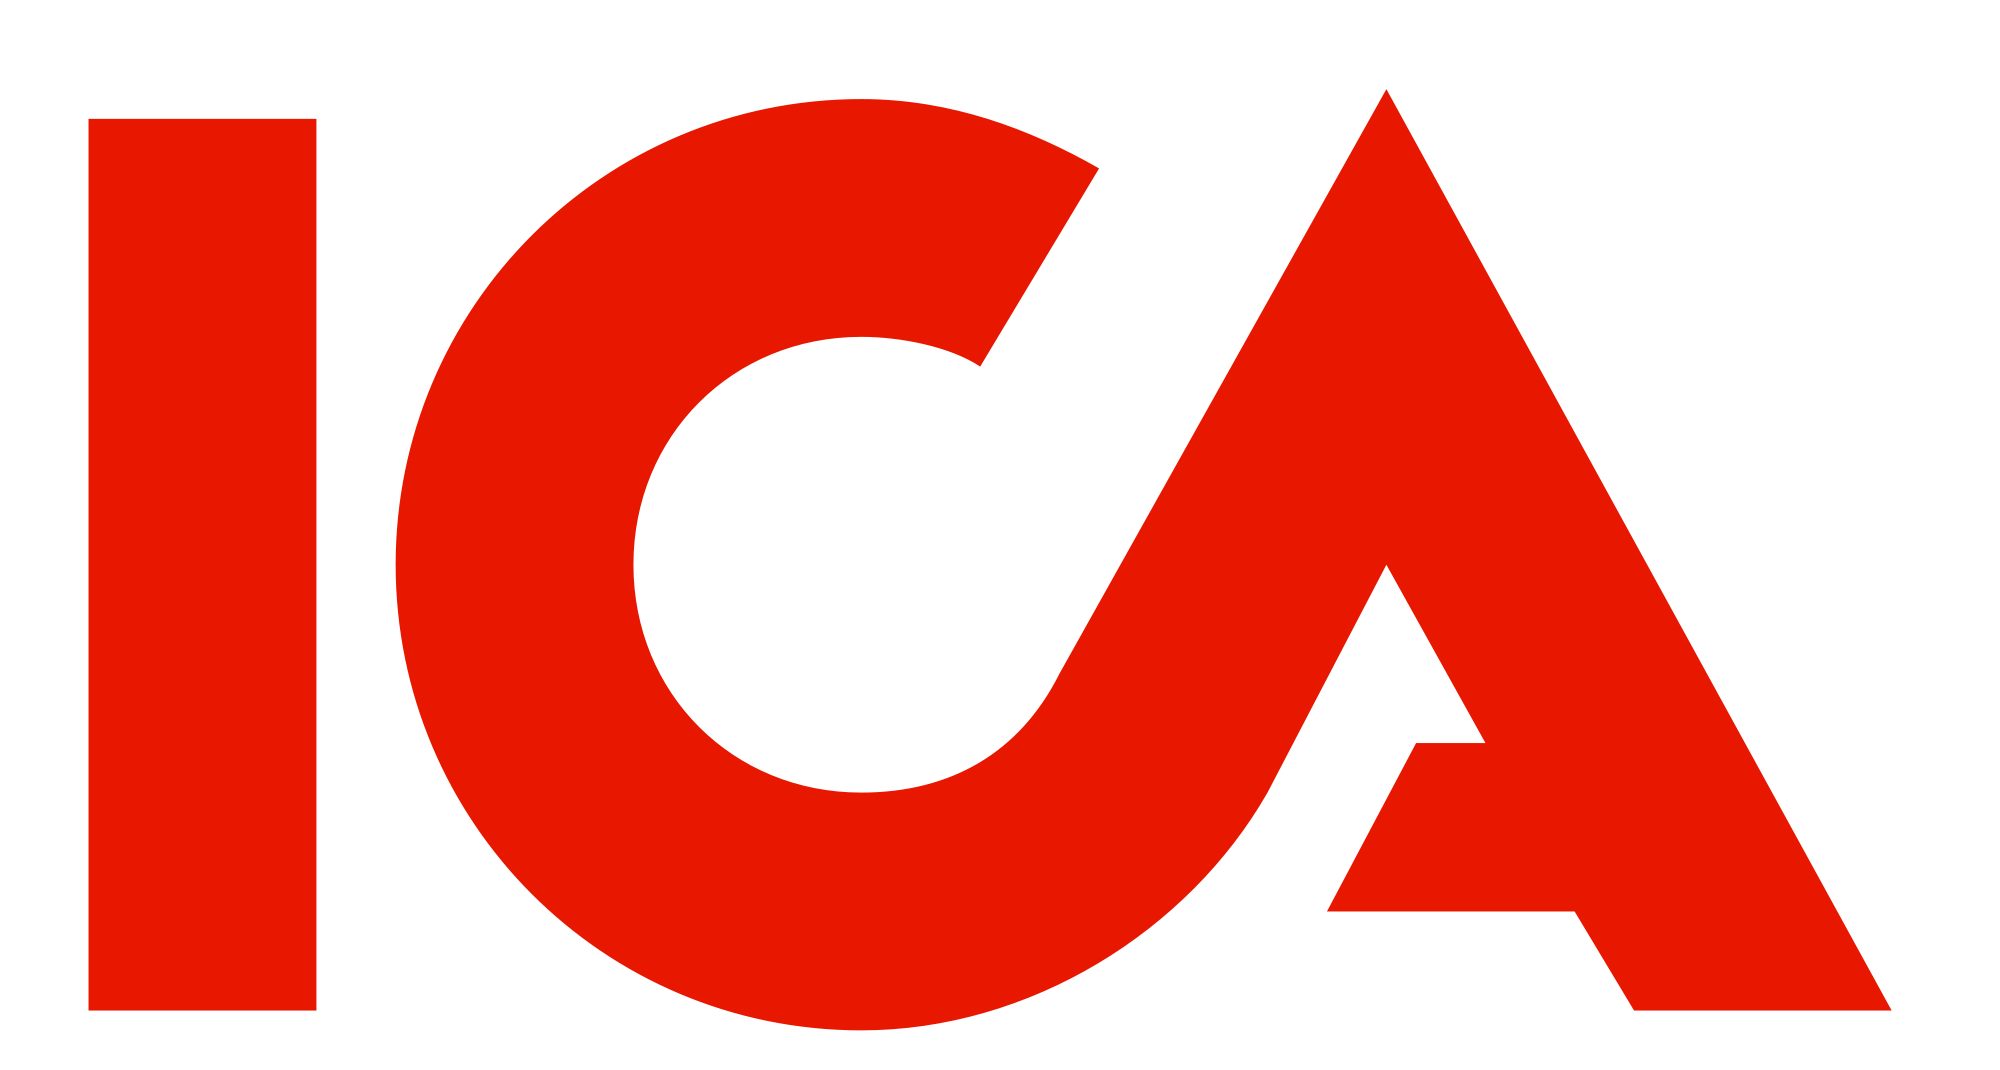 ICA logotyp